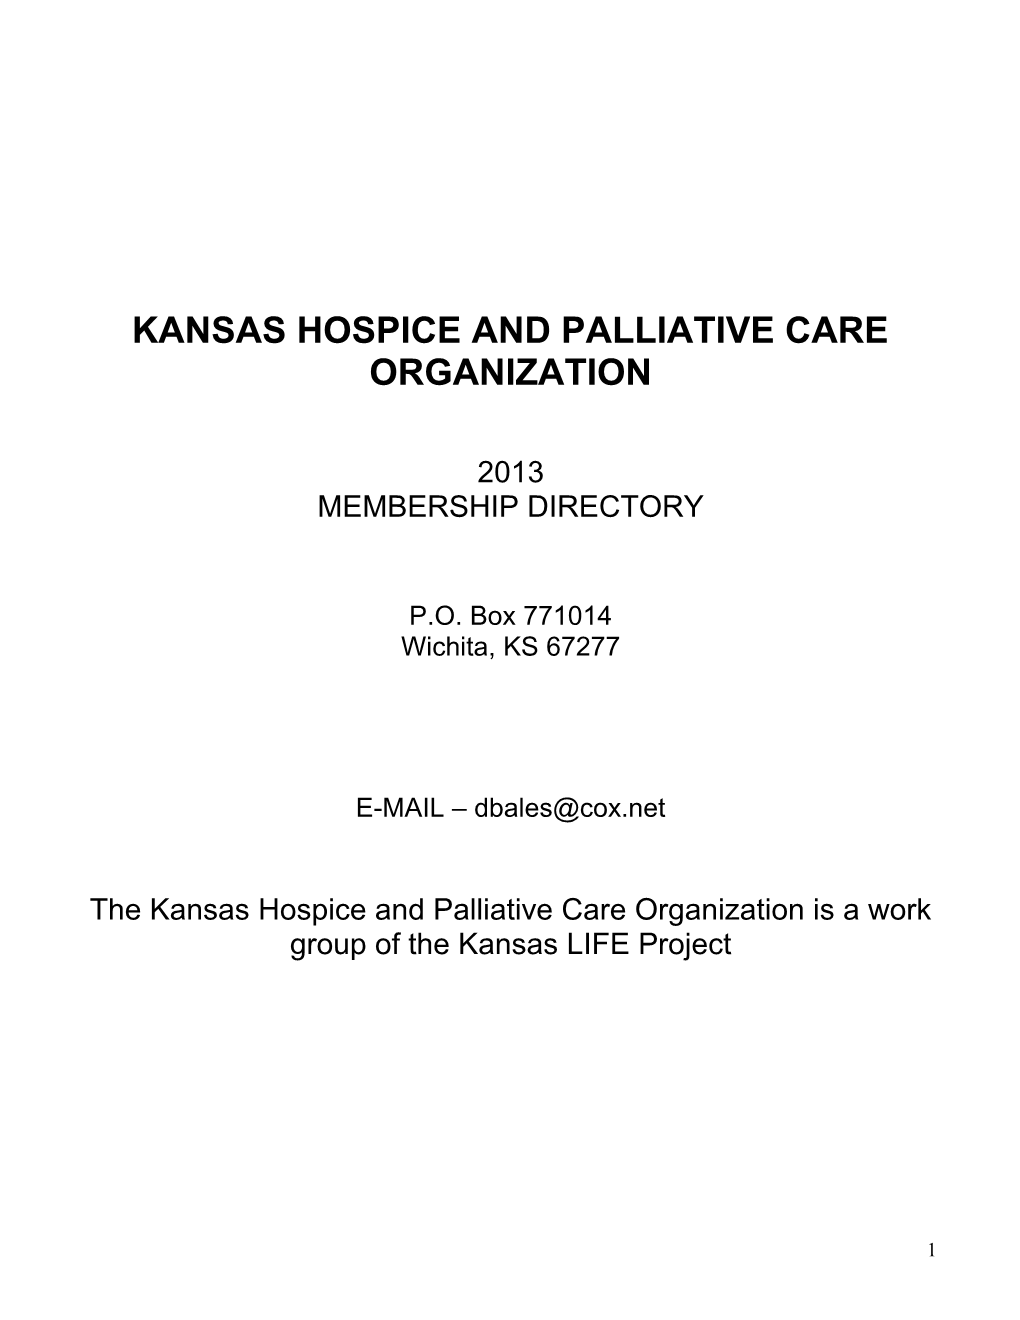 Kansas Hospice and Palliative Care Organization